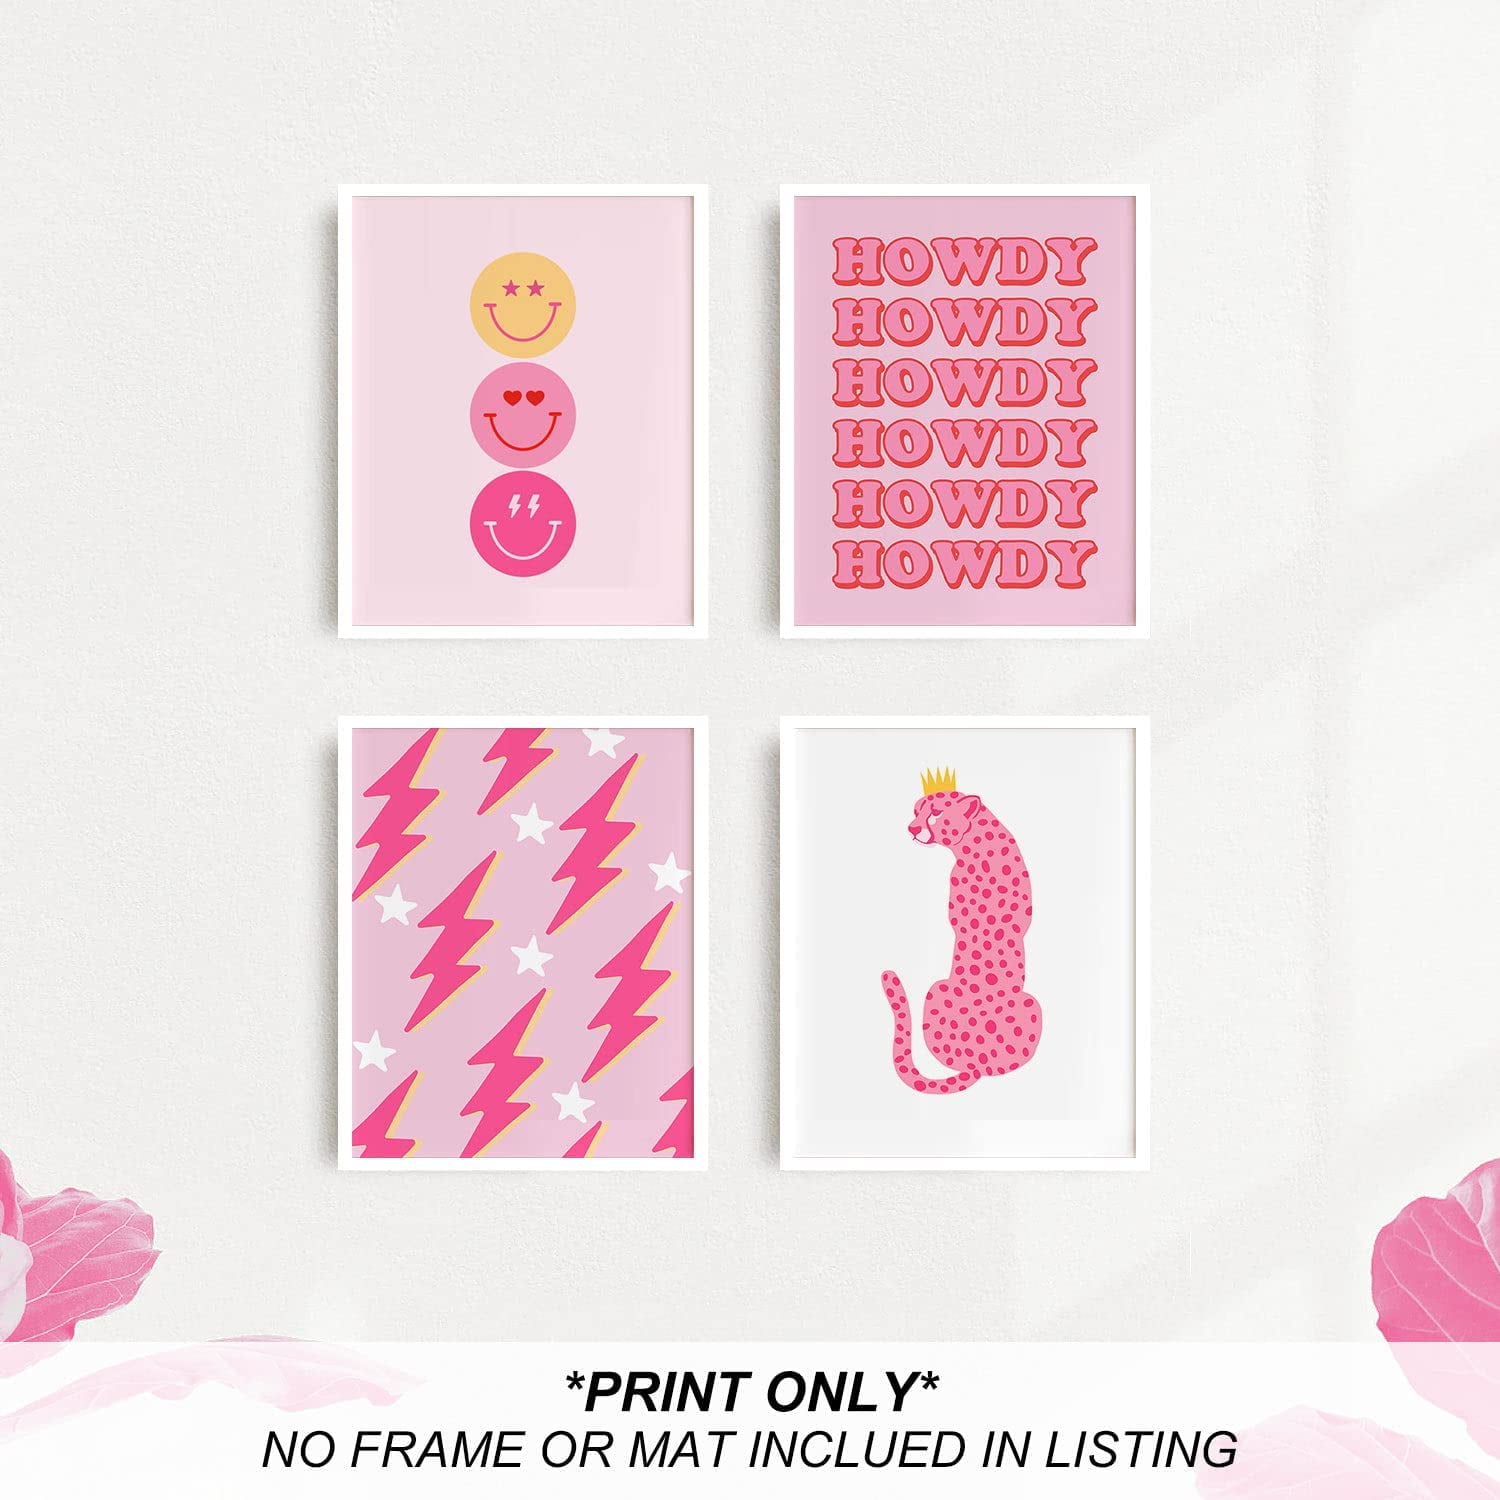  Haus and Hues Skull Art Print - Pink Posters For Teen Girls Room  Baddie Aesthetic Room Decor Wall Art Pink Posters For Room Aesthetic  Posters For Bedroom Pink Modern Art Girly